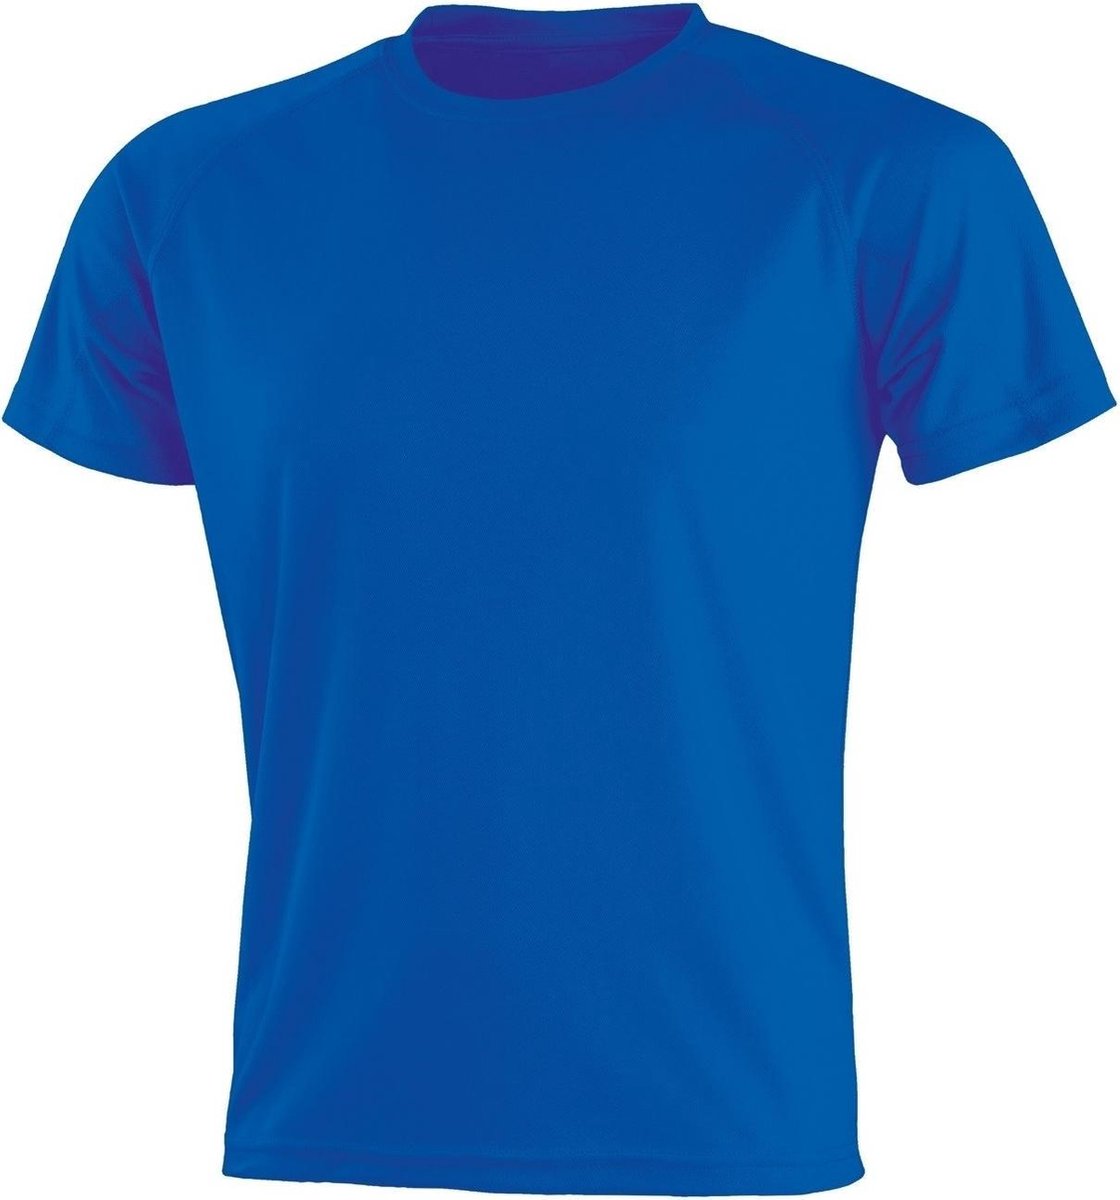 Senvi Sports Performance T-Shirt- Royal - XL - Unisex